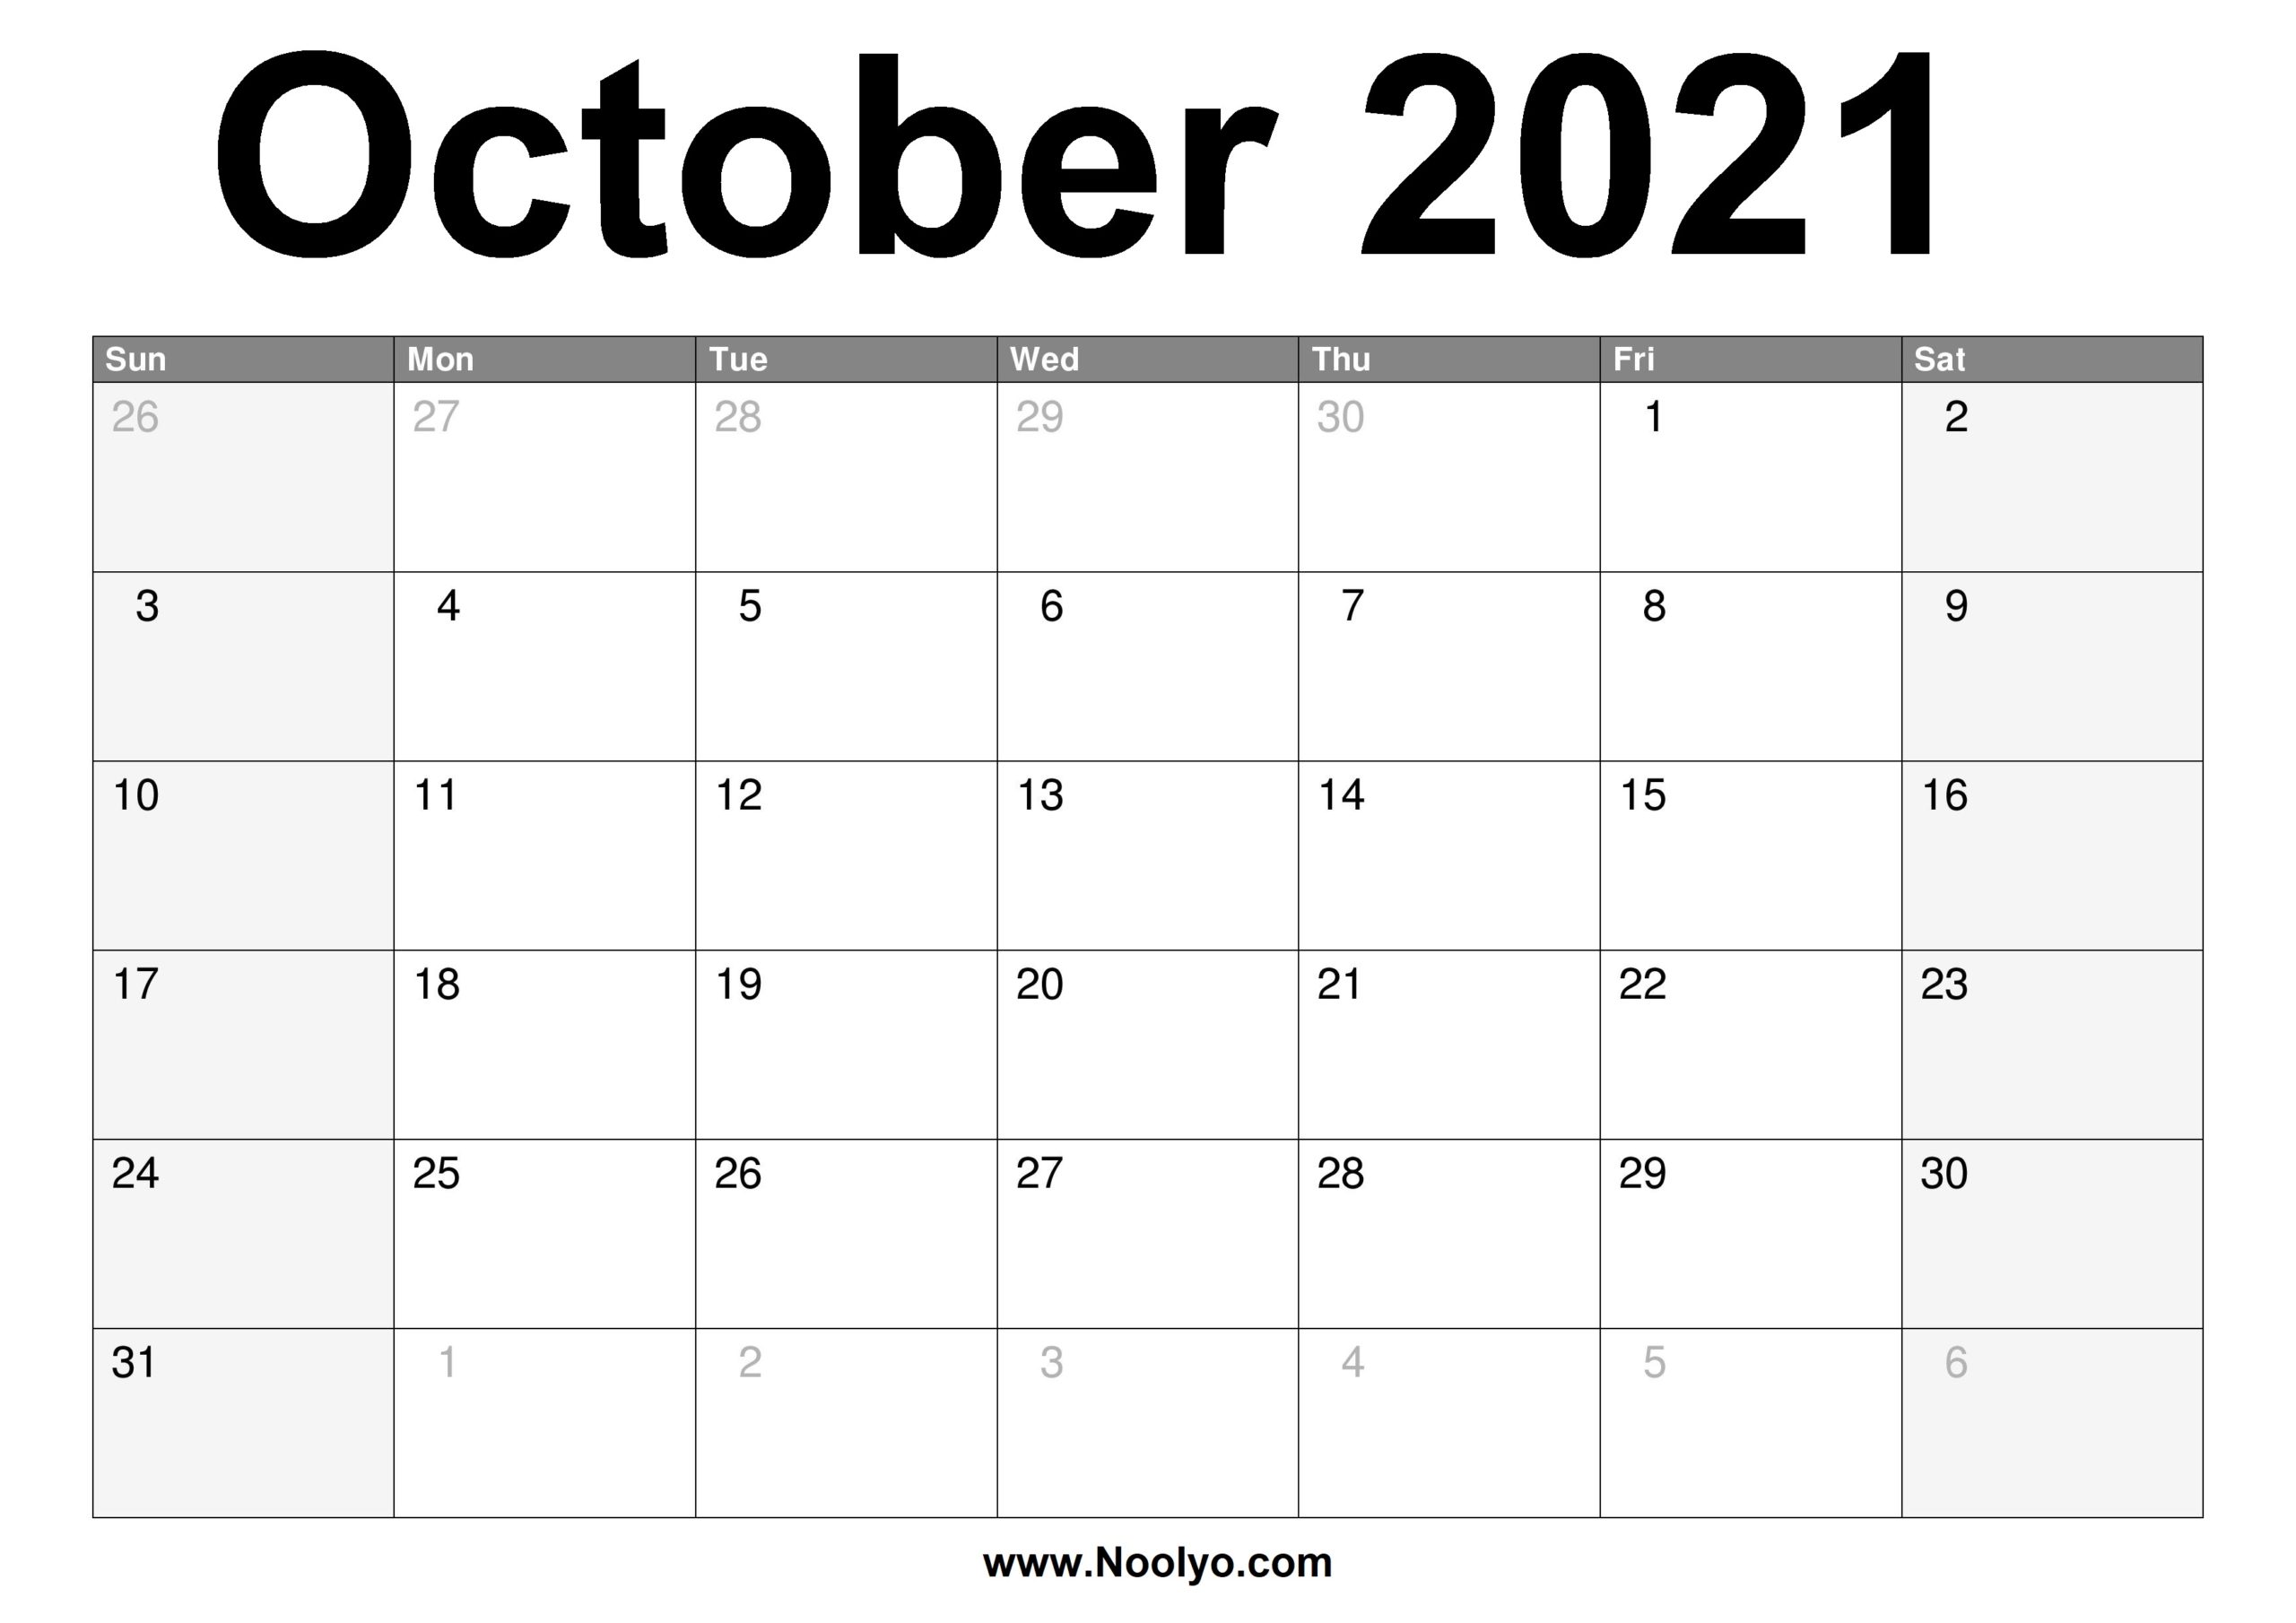 October 2021 Calendar Printable – Free Download